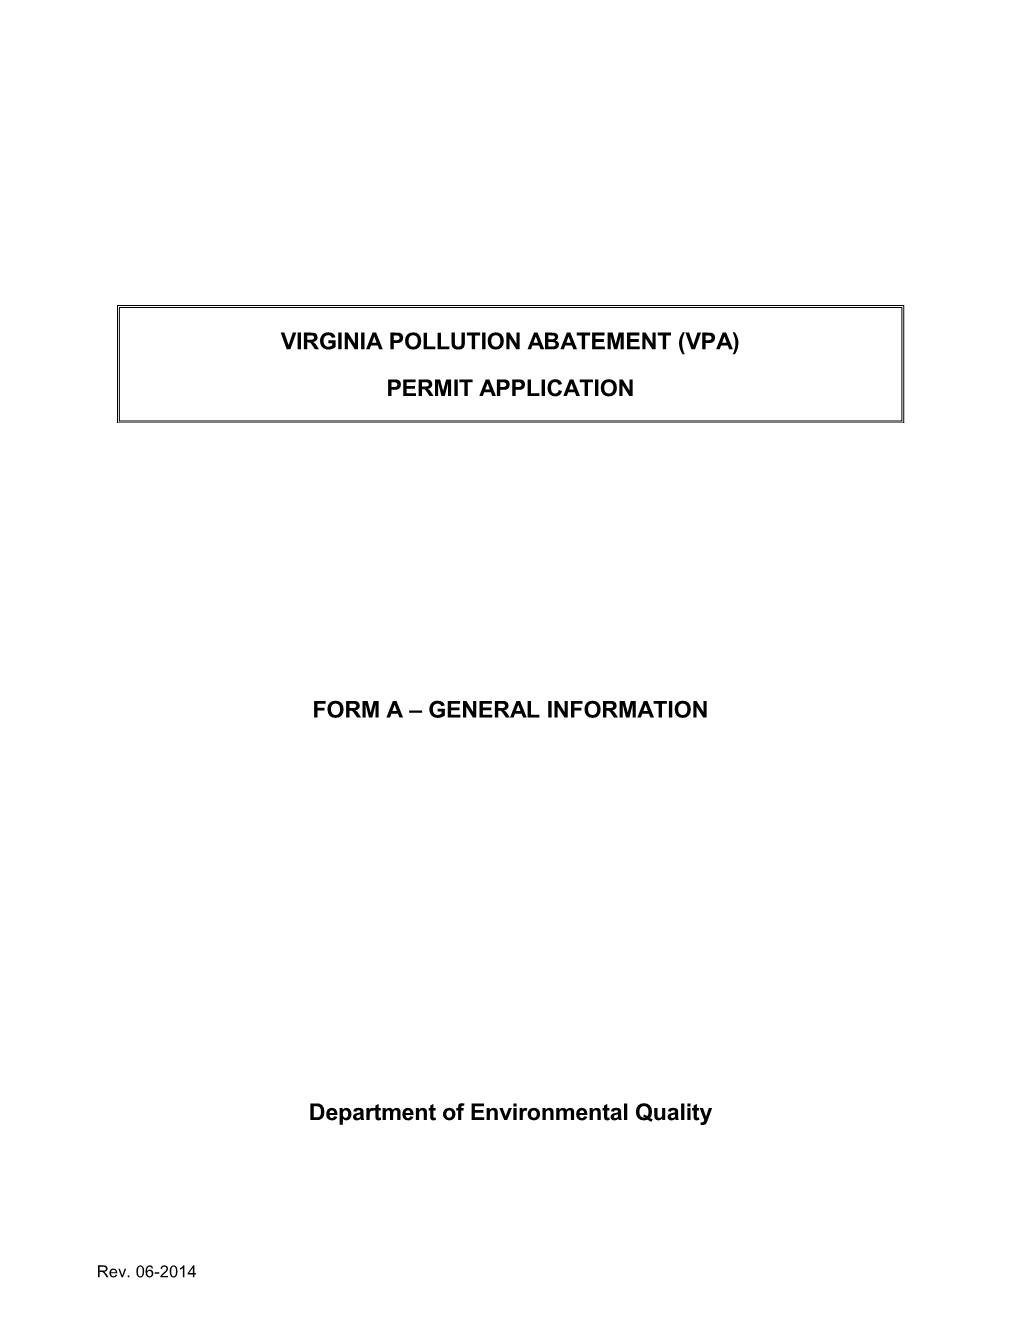 Virginia Pollution Abatement Permit Application